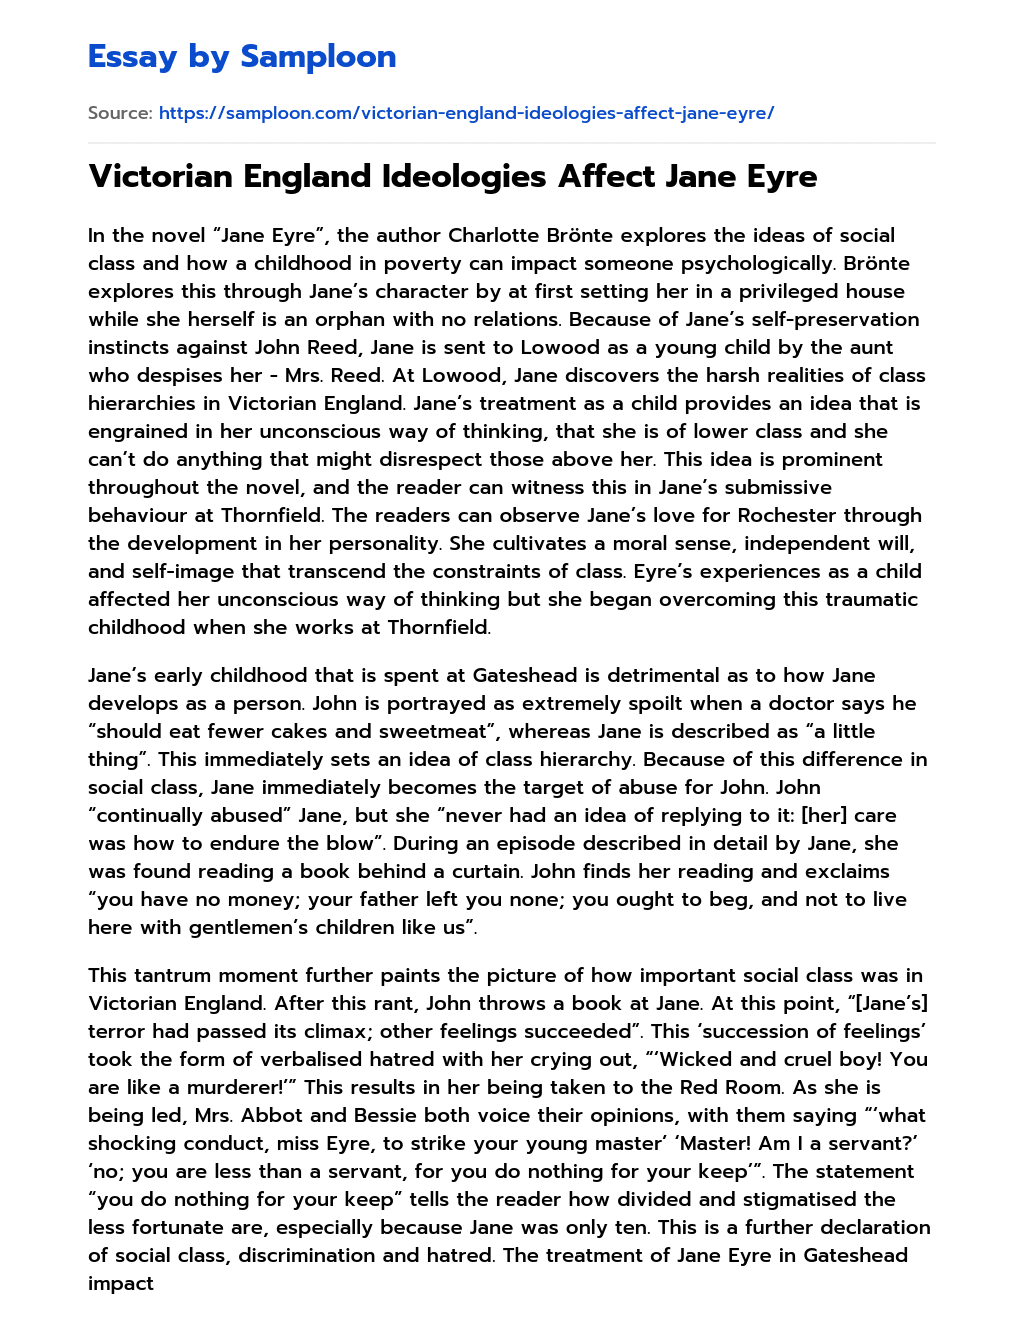 Victorian England Ideologies Affect Jane Eyre essay